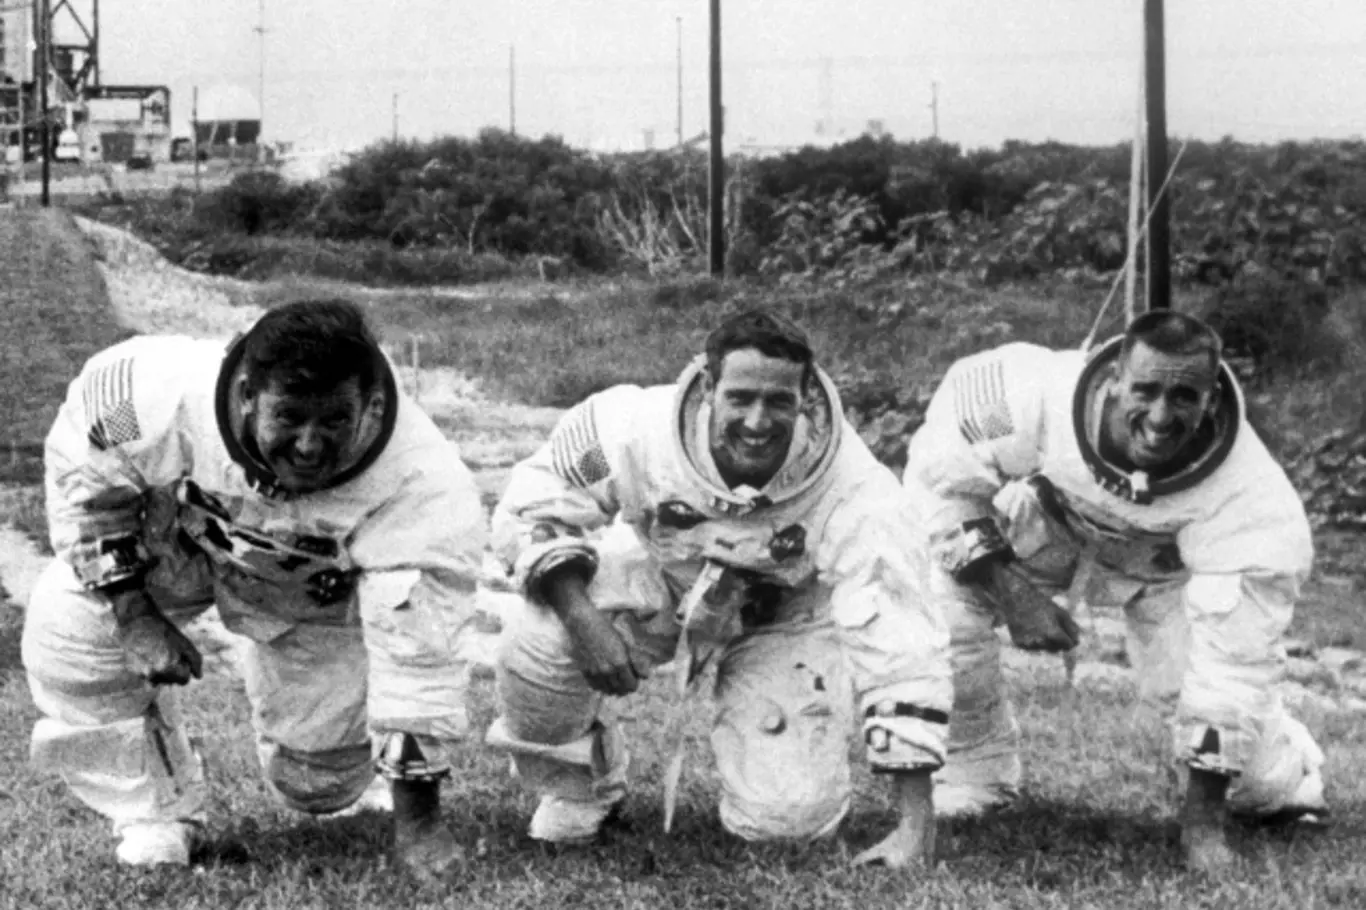 Členové posádky Apolla 7 Walter Schirra, Donn Eisele a Walter Cunningham